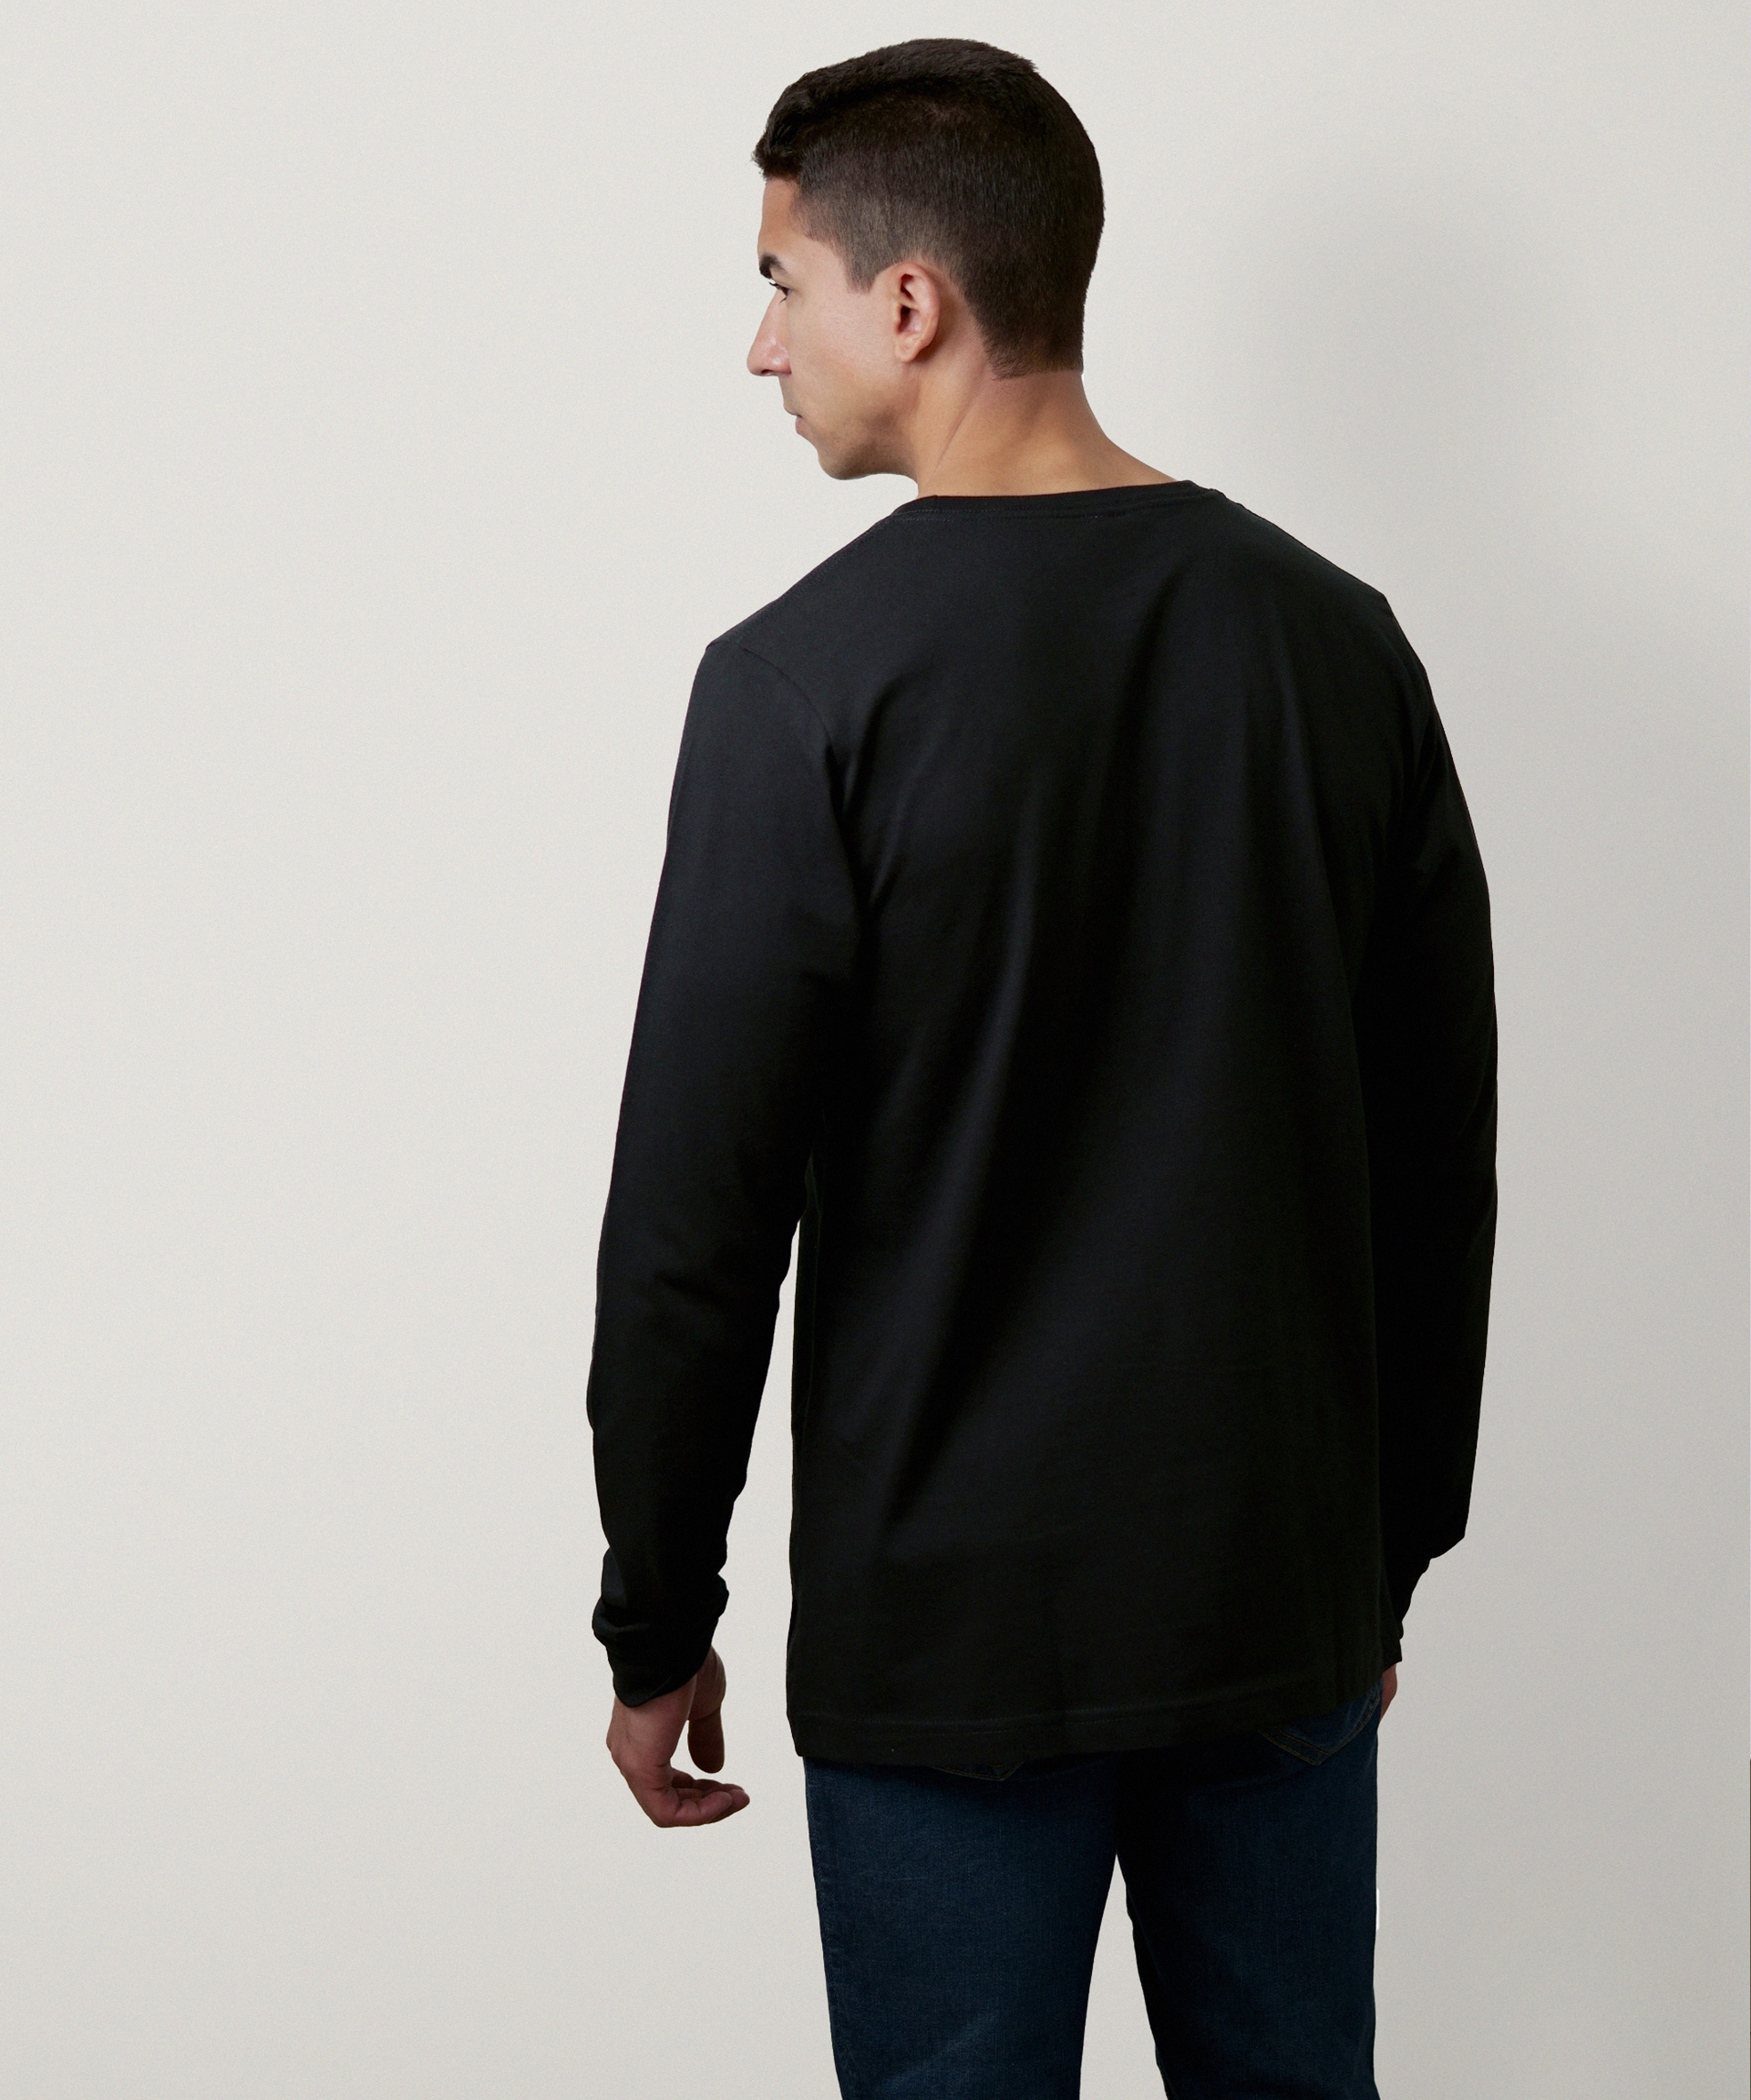 Signature Long Sleeve T-Shirt for Men (Black)